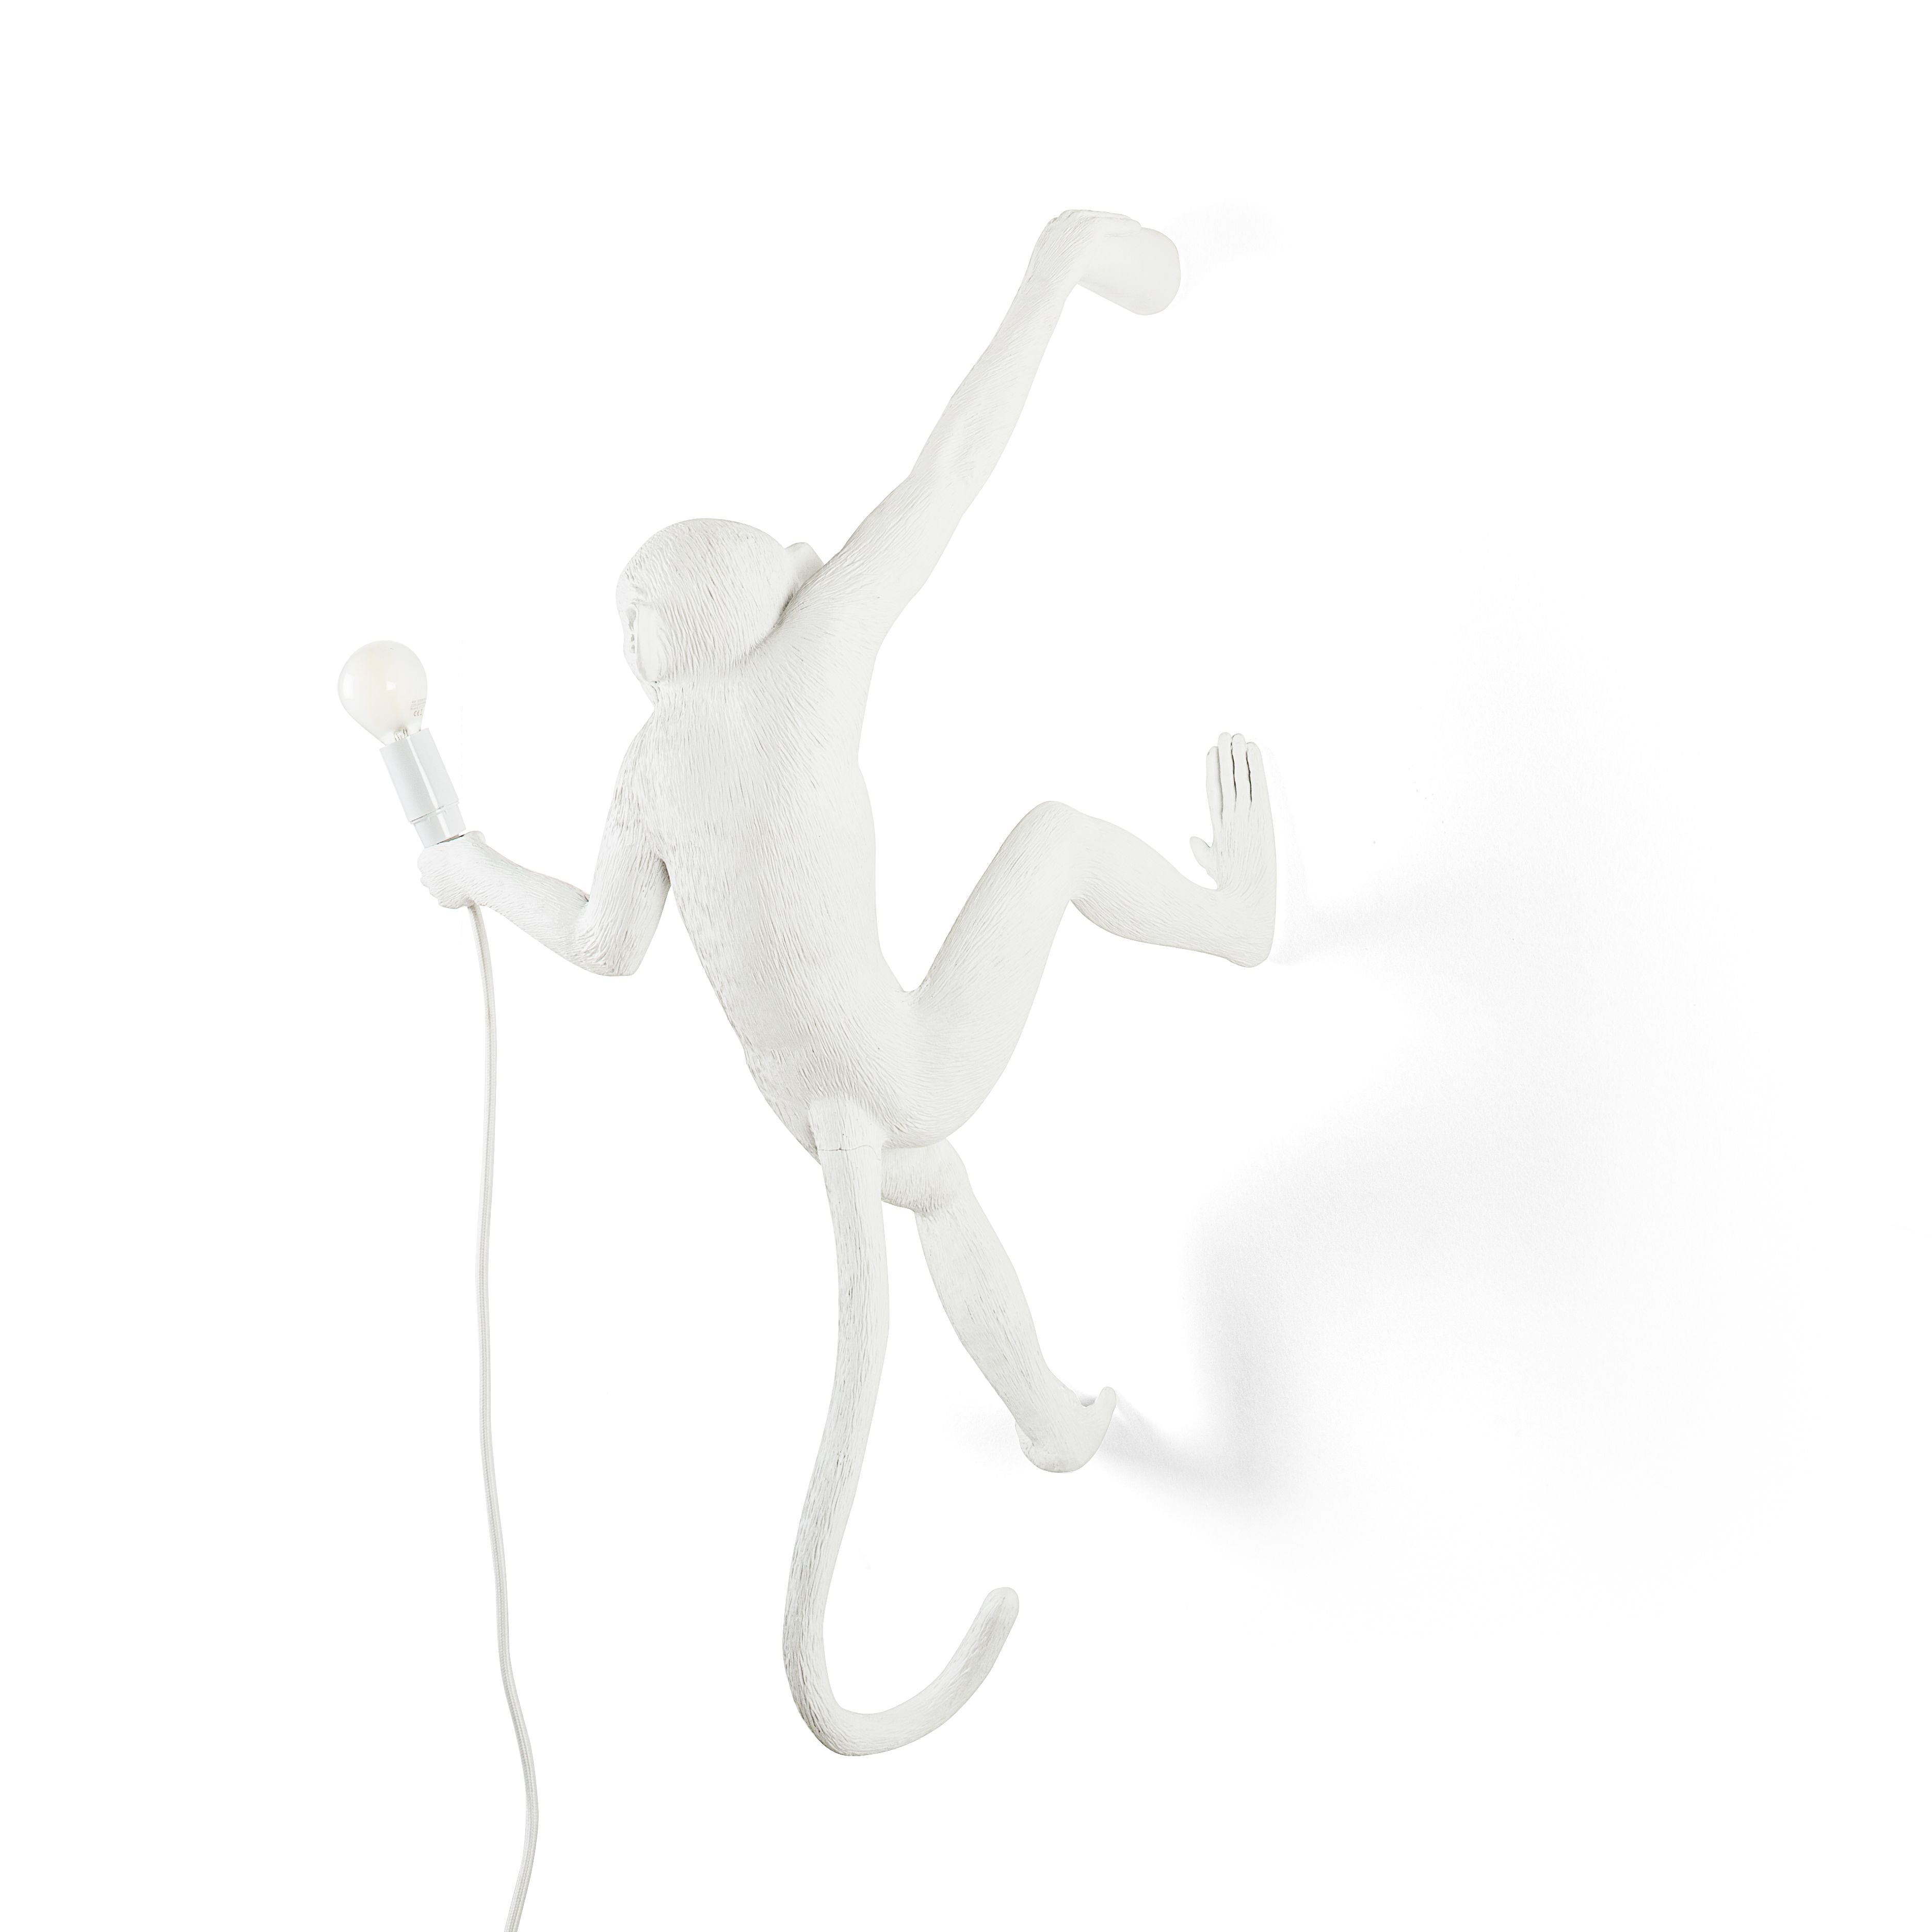 Seletti Monkey Indoor Lamp White, hængende højre hånd